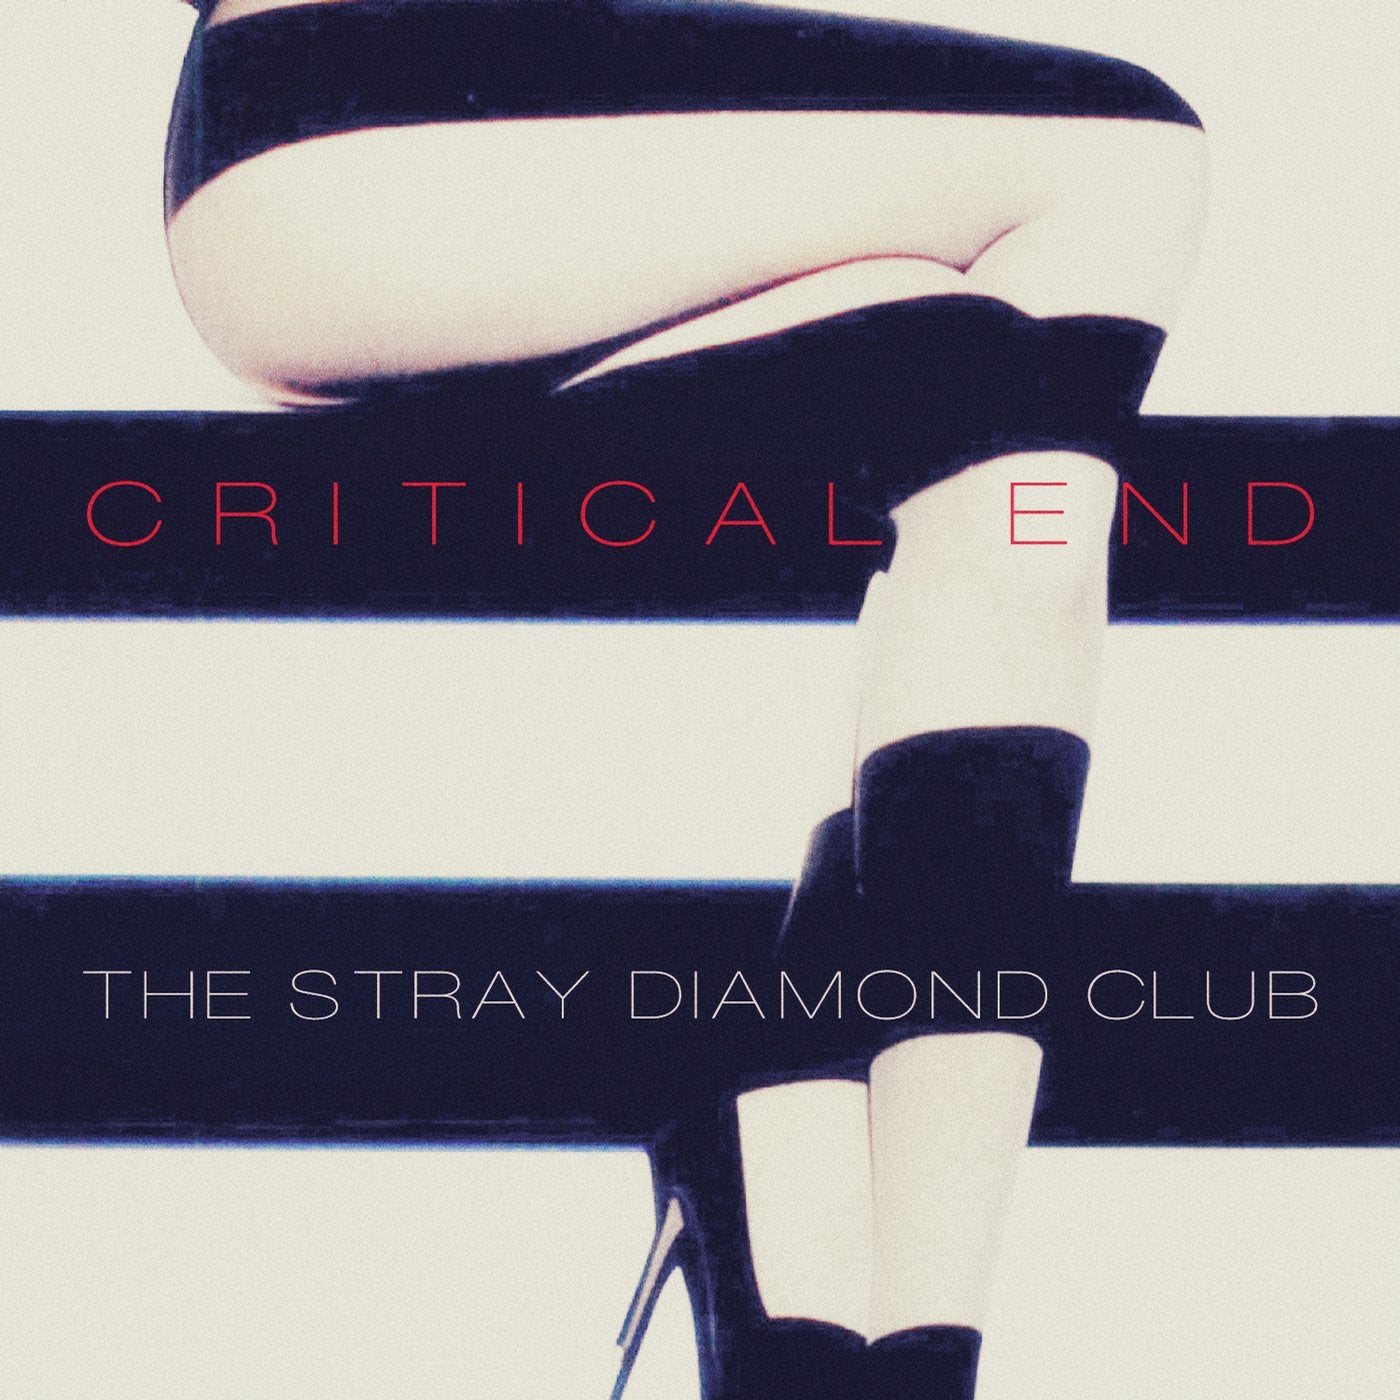 The Stray Diamond Club